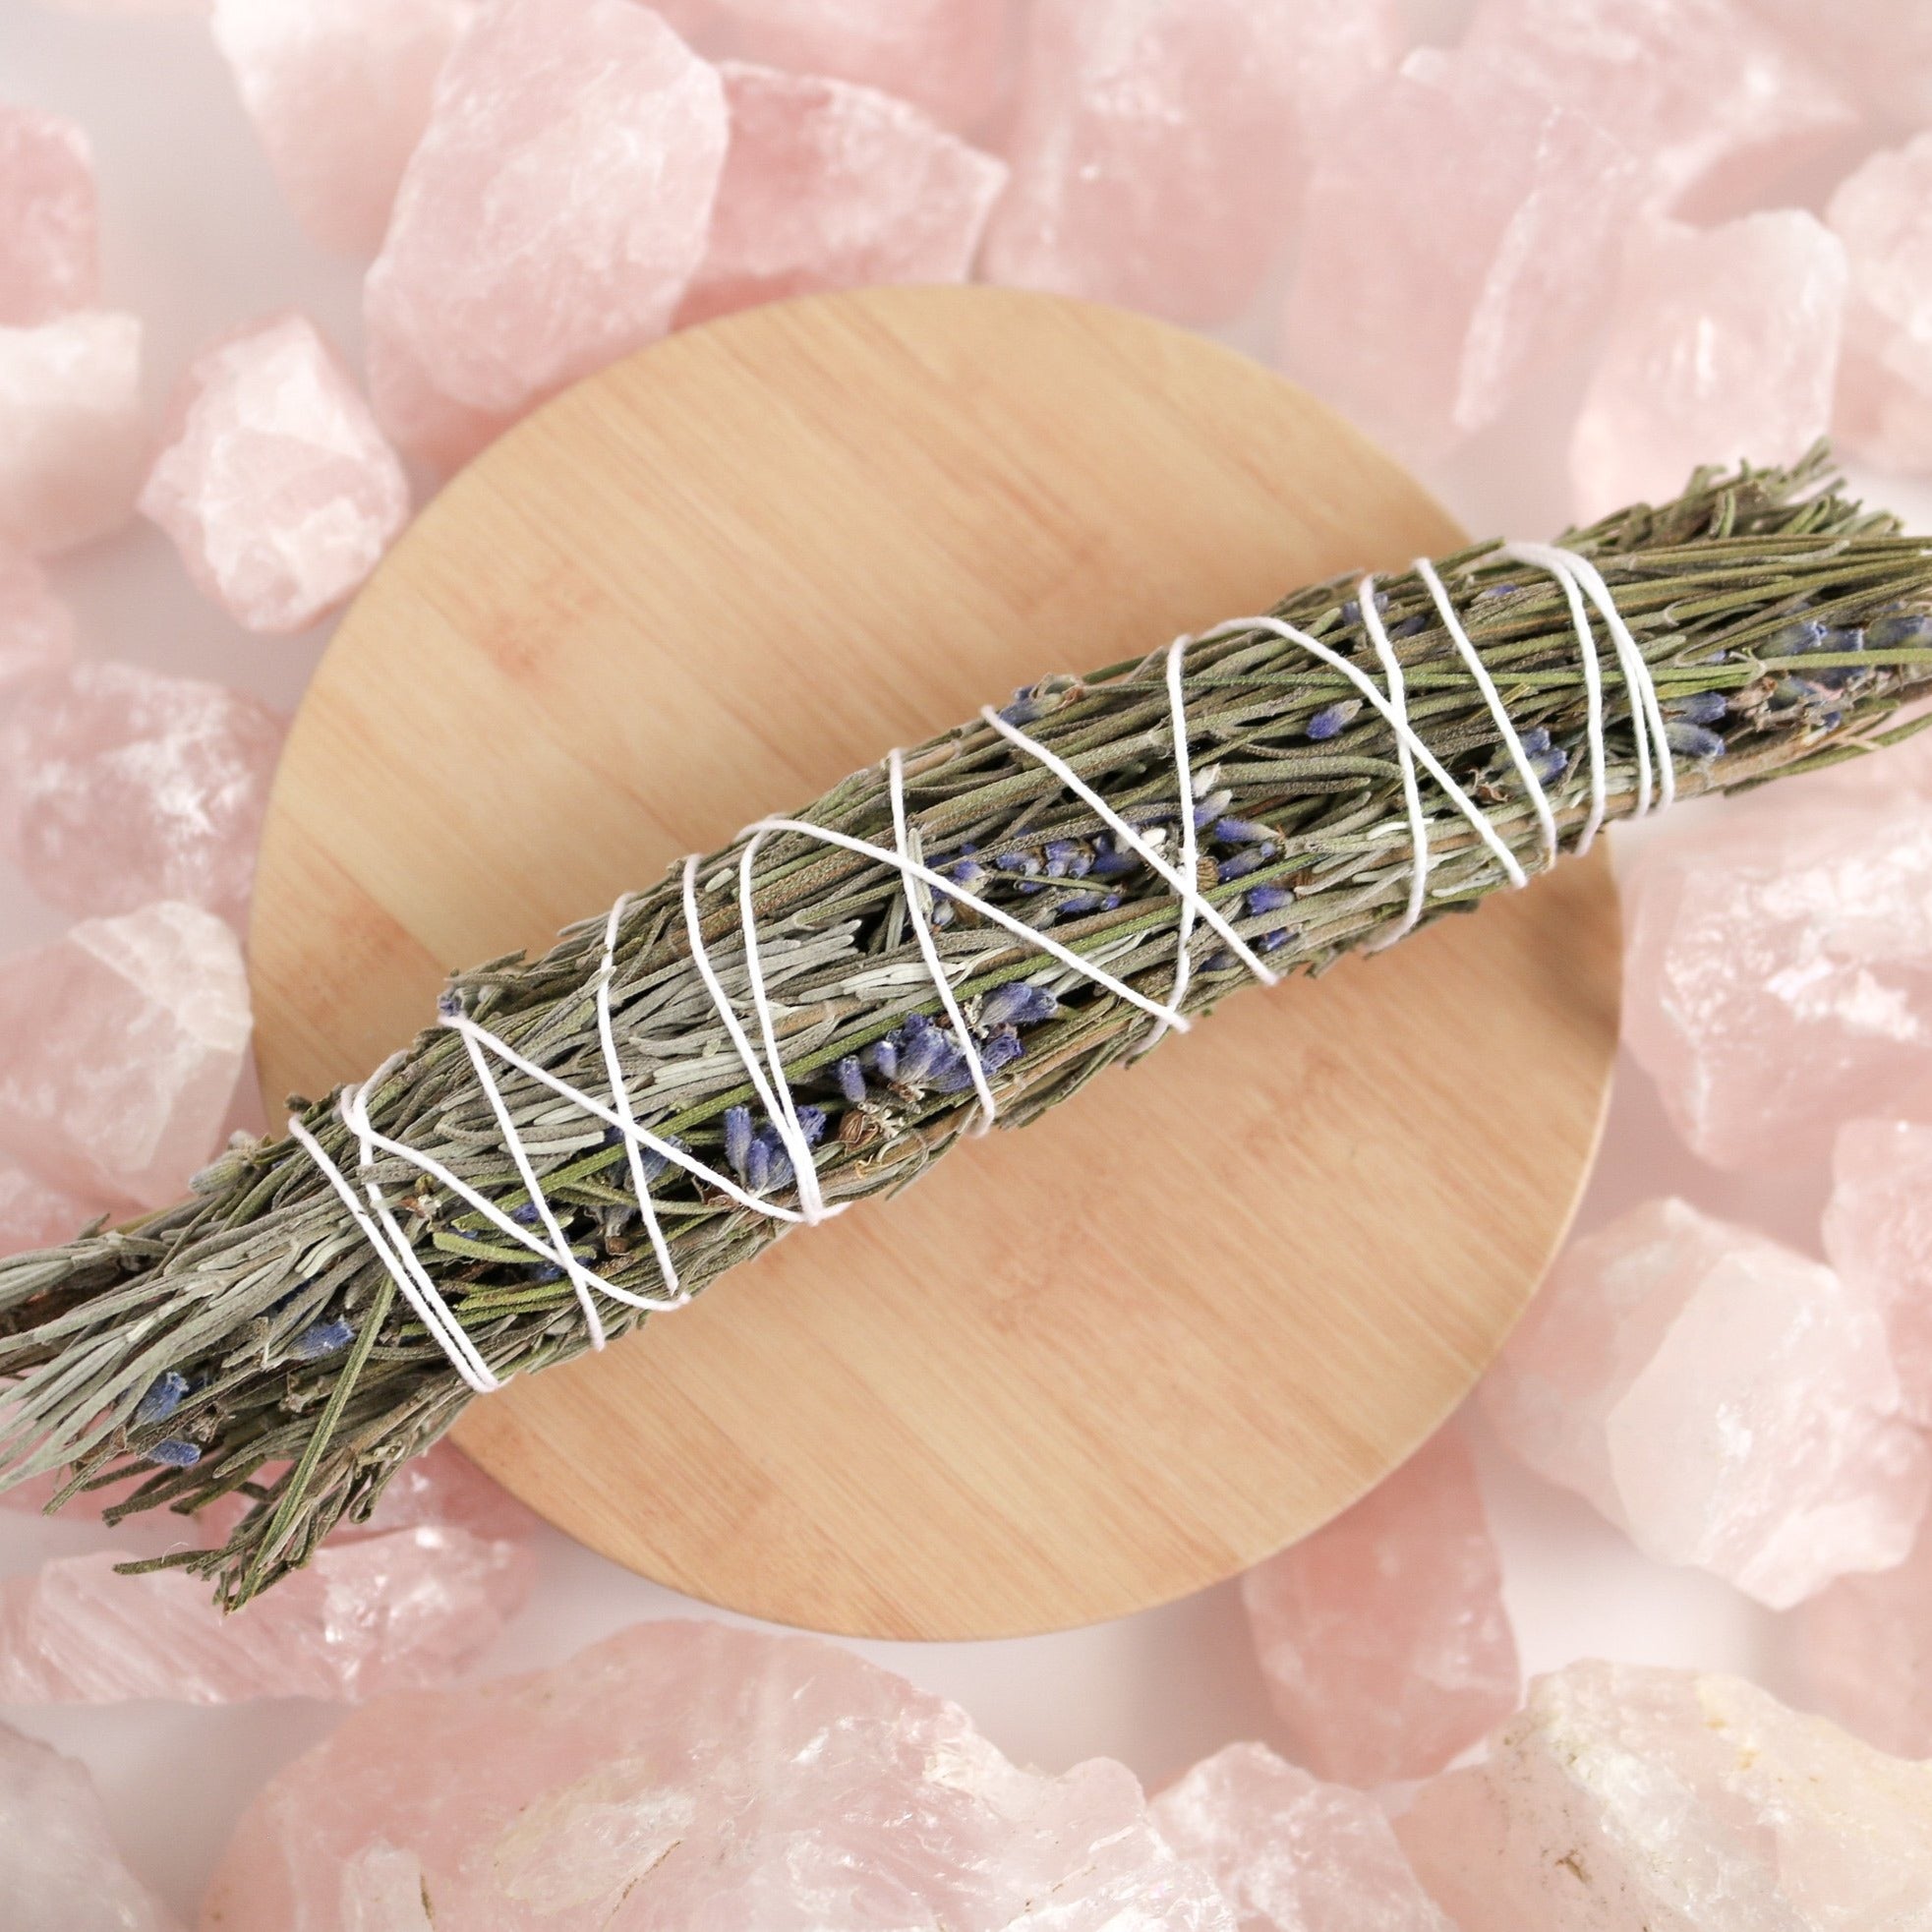 lavender bundle smudge stick for energy cleansing